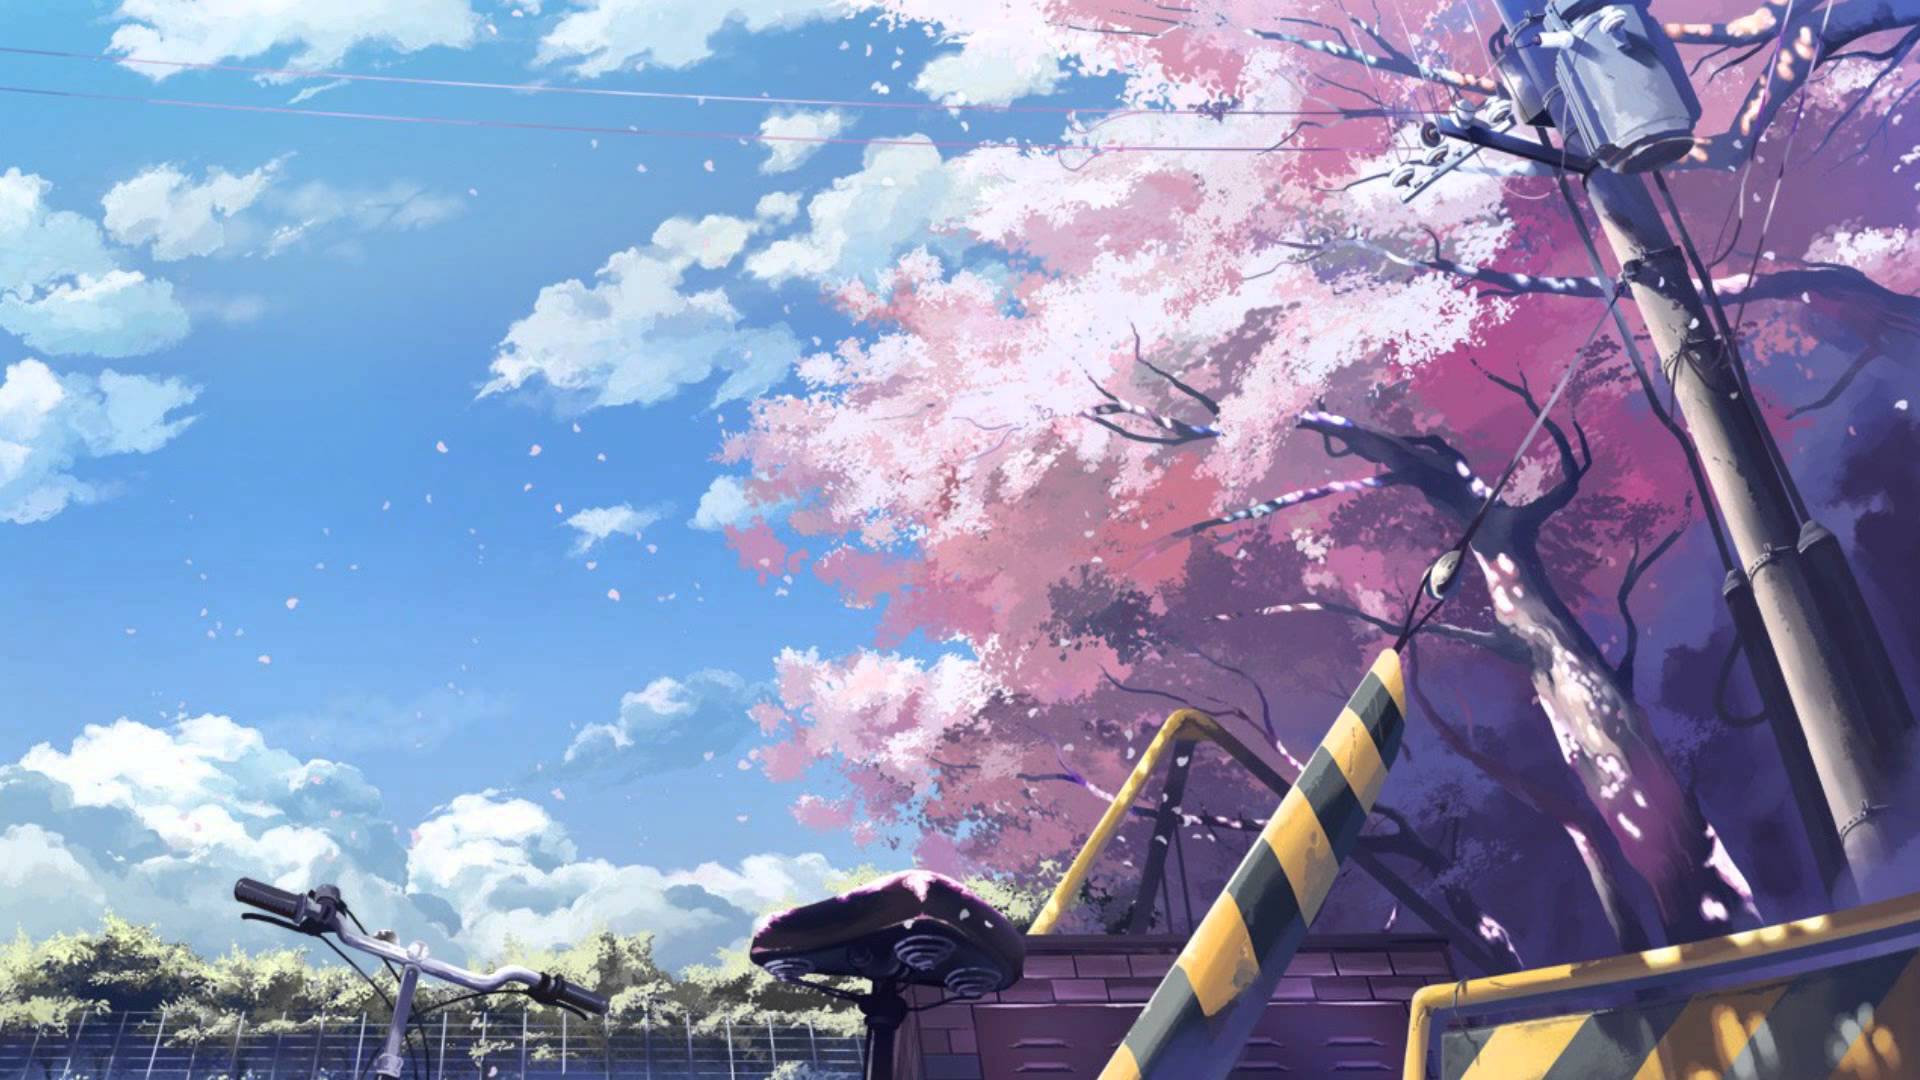 Cherry Blossom Tree Village Wallpaper Download  MOONAZ